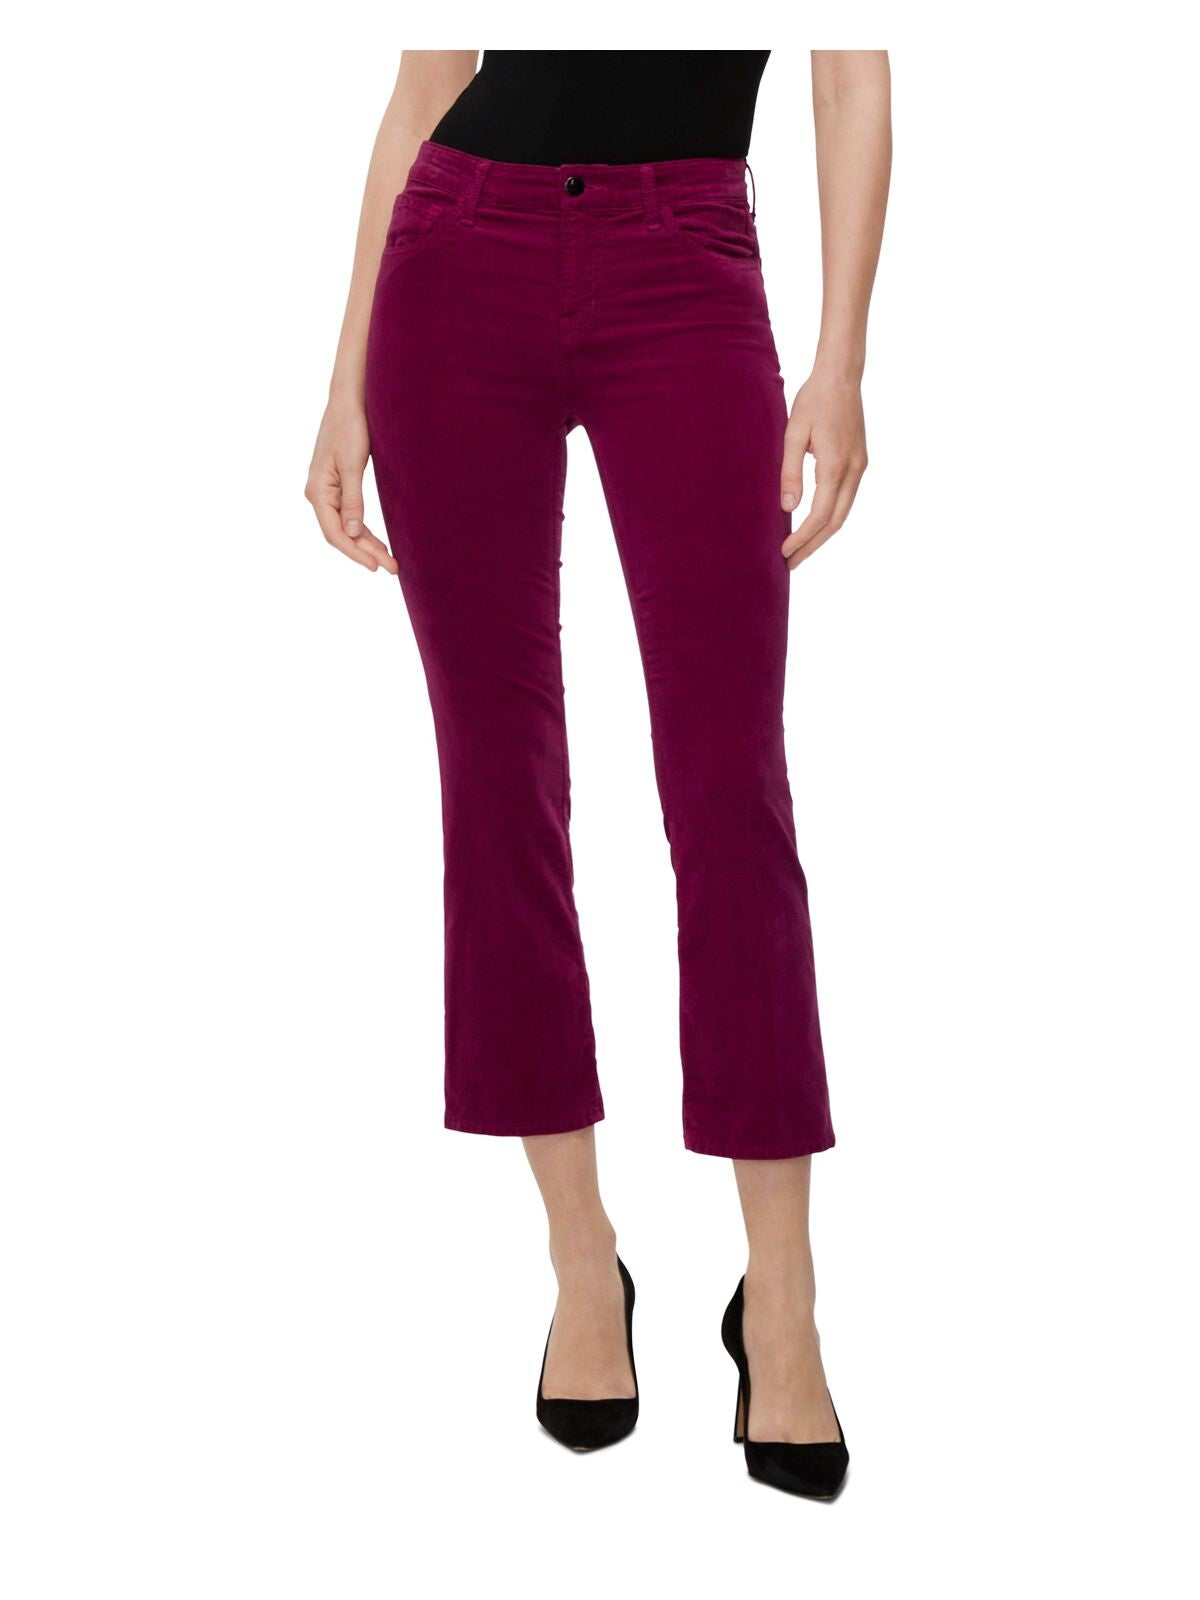 J BRAND Womens Purple Jeans 31 Waist